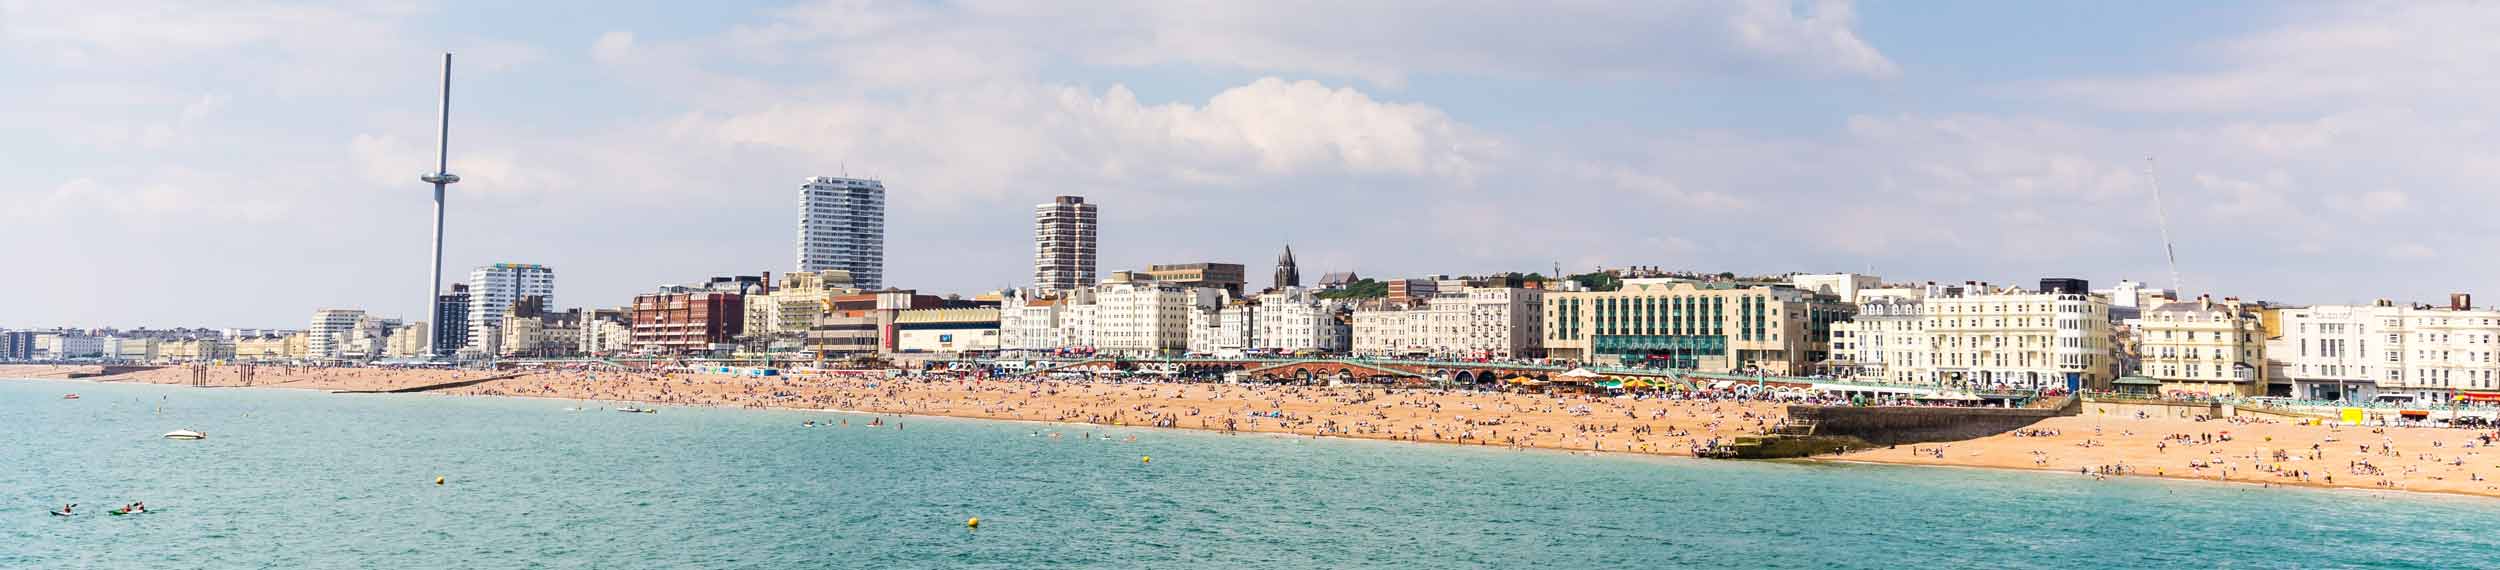 View of the Brighton Beach in Brighton, UK-England. 